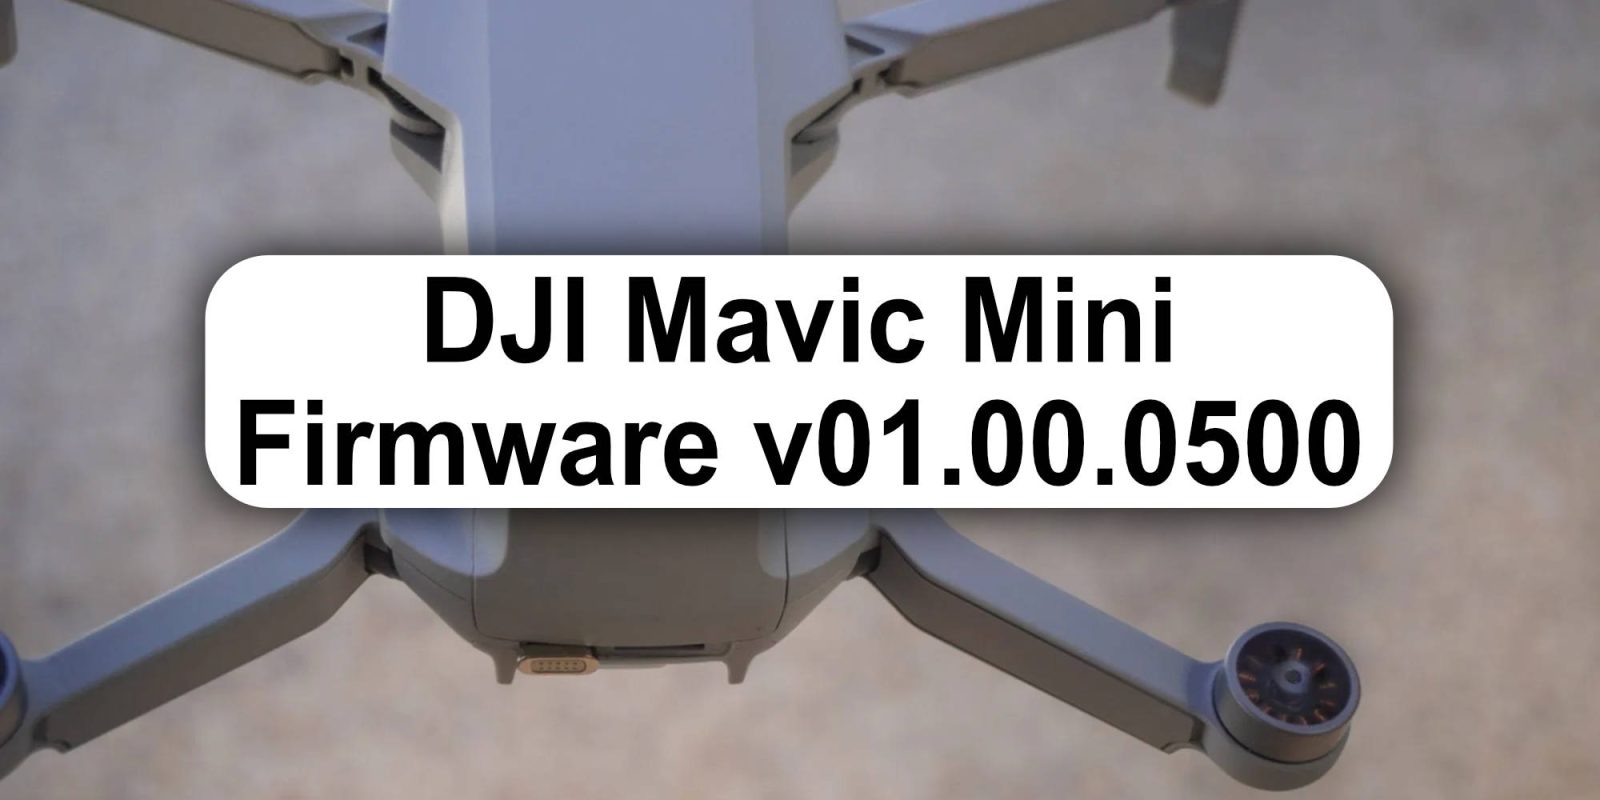 DJI Mavic Mini update firmware